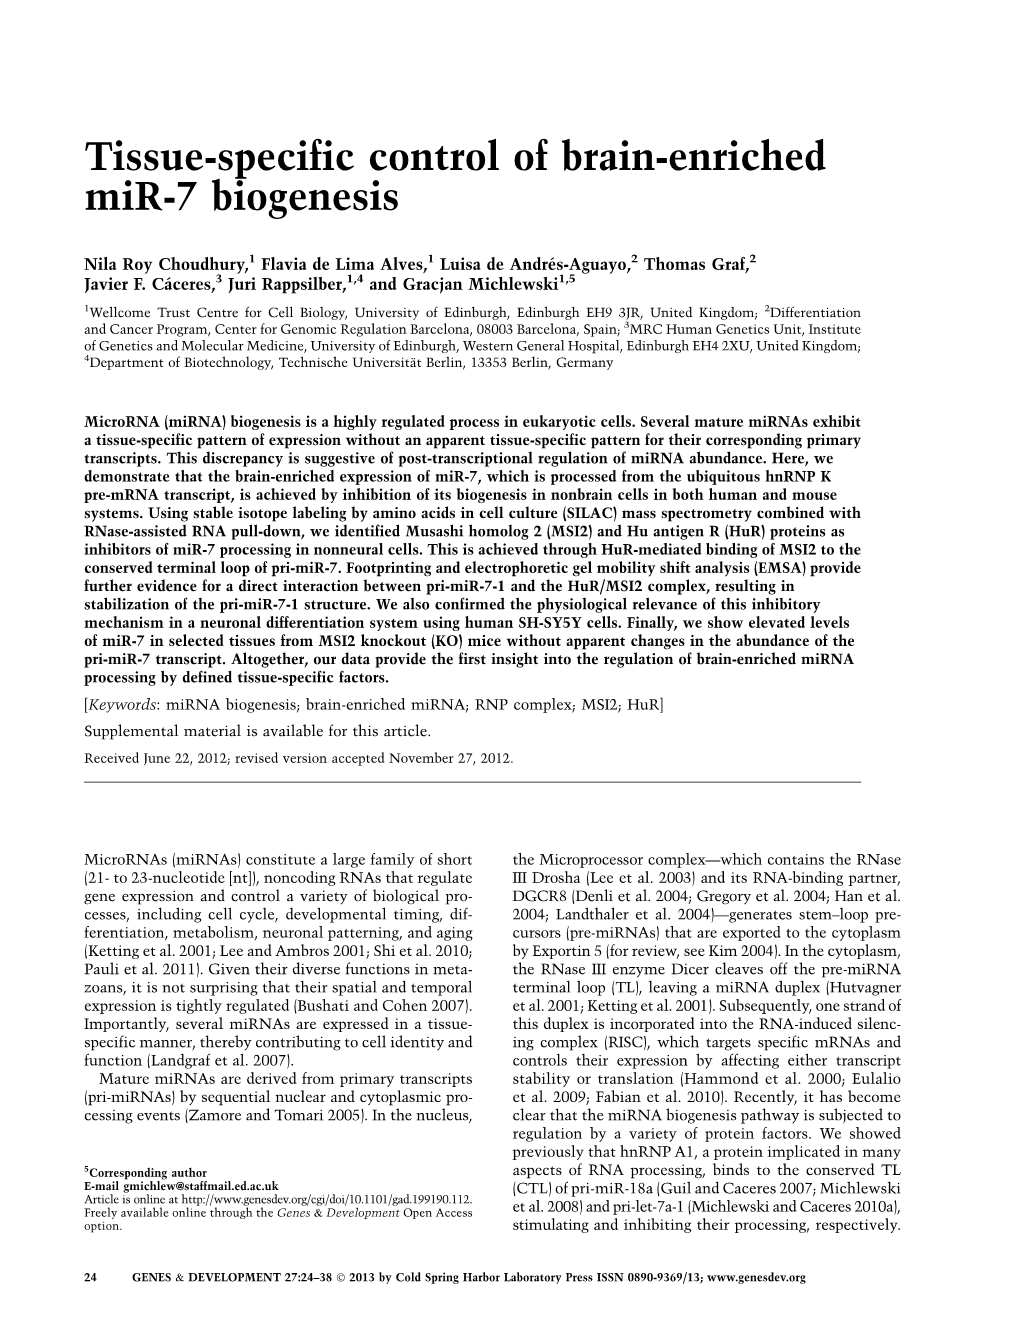 Tissue-Specific Control of Brain-Enriched Mir-7 Biogenesis